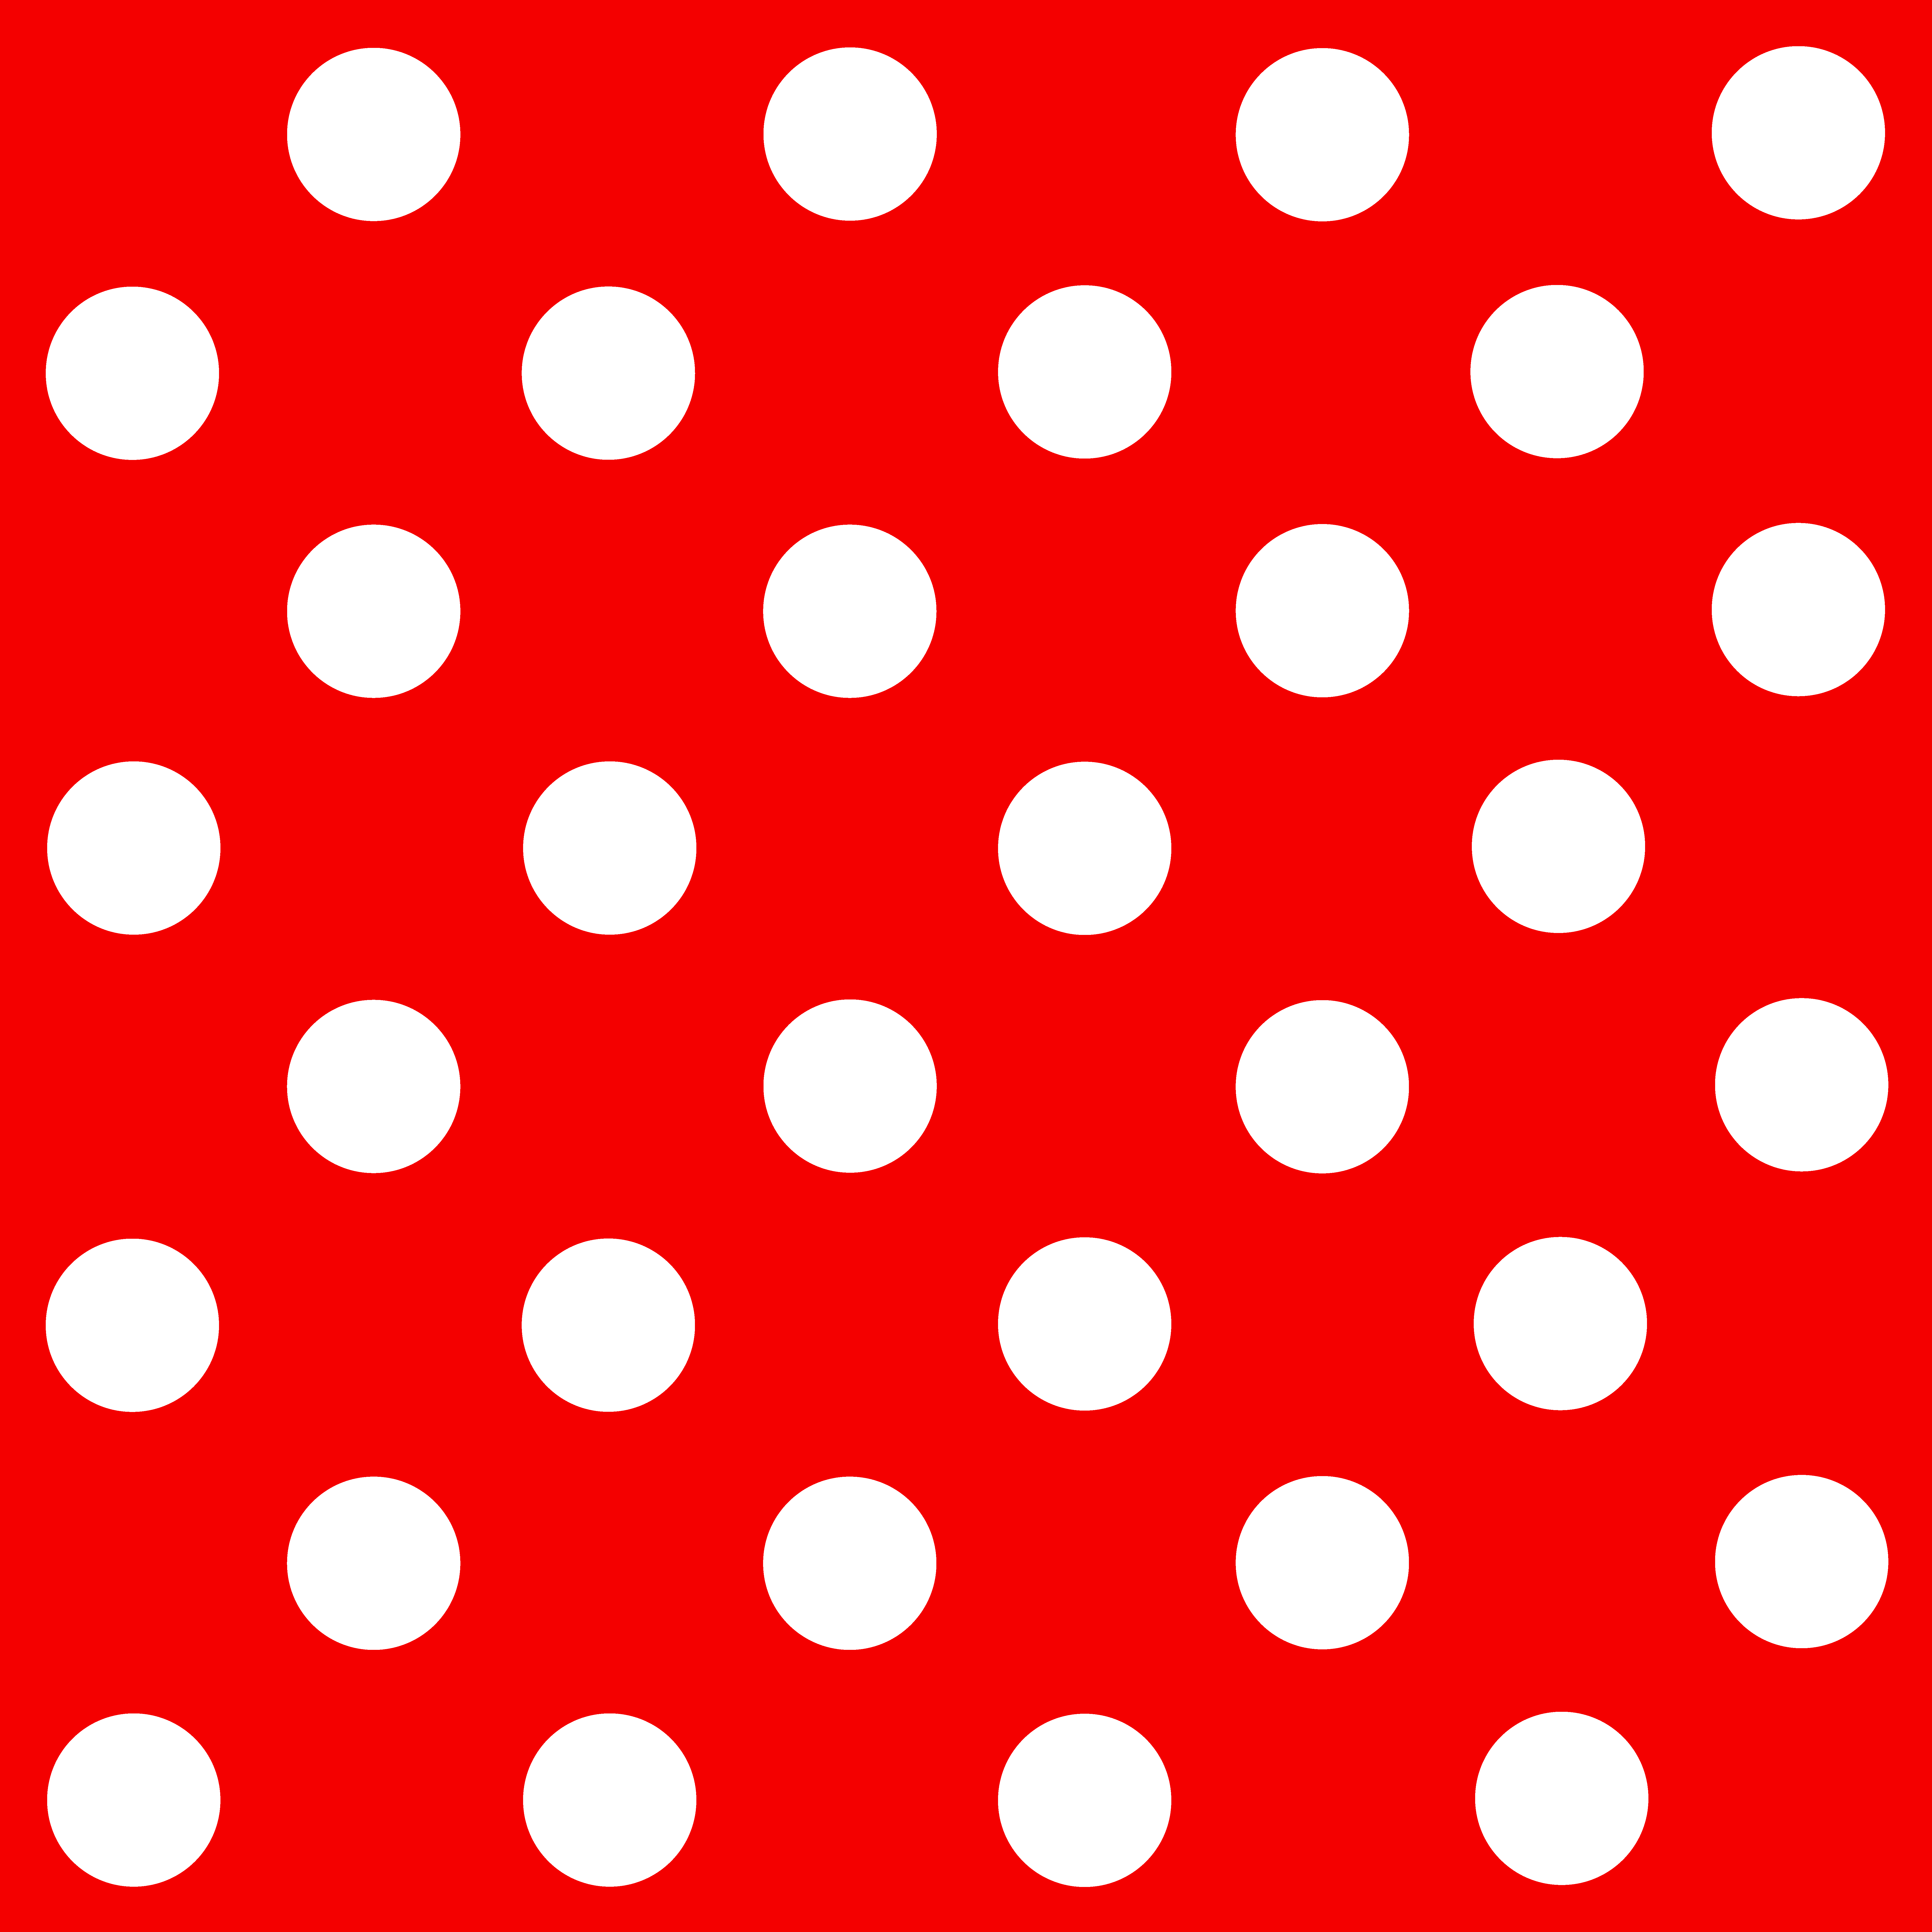 Polka Dot Pattern!. Polka dots wallpaper, Polka dot background, Red and white